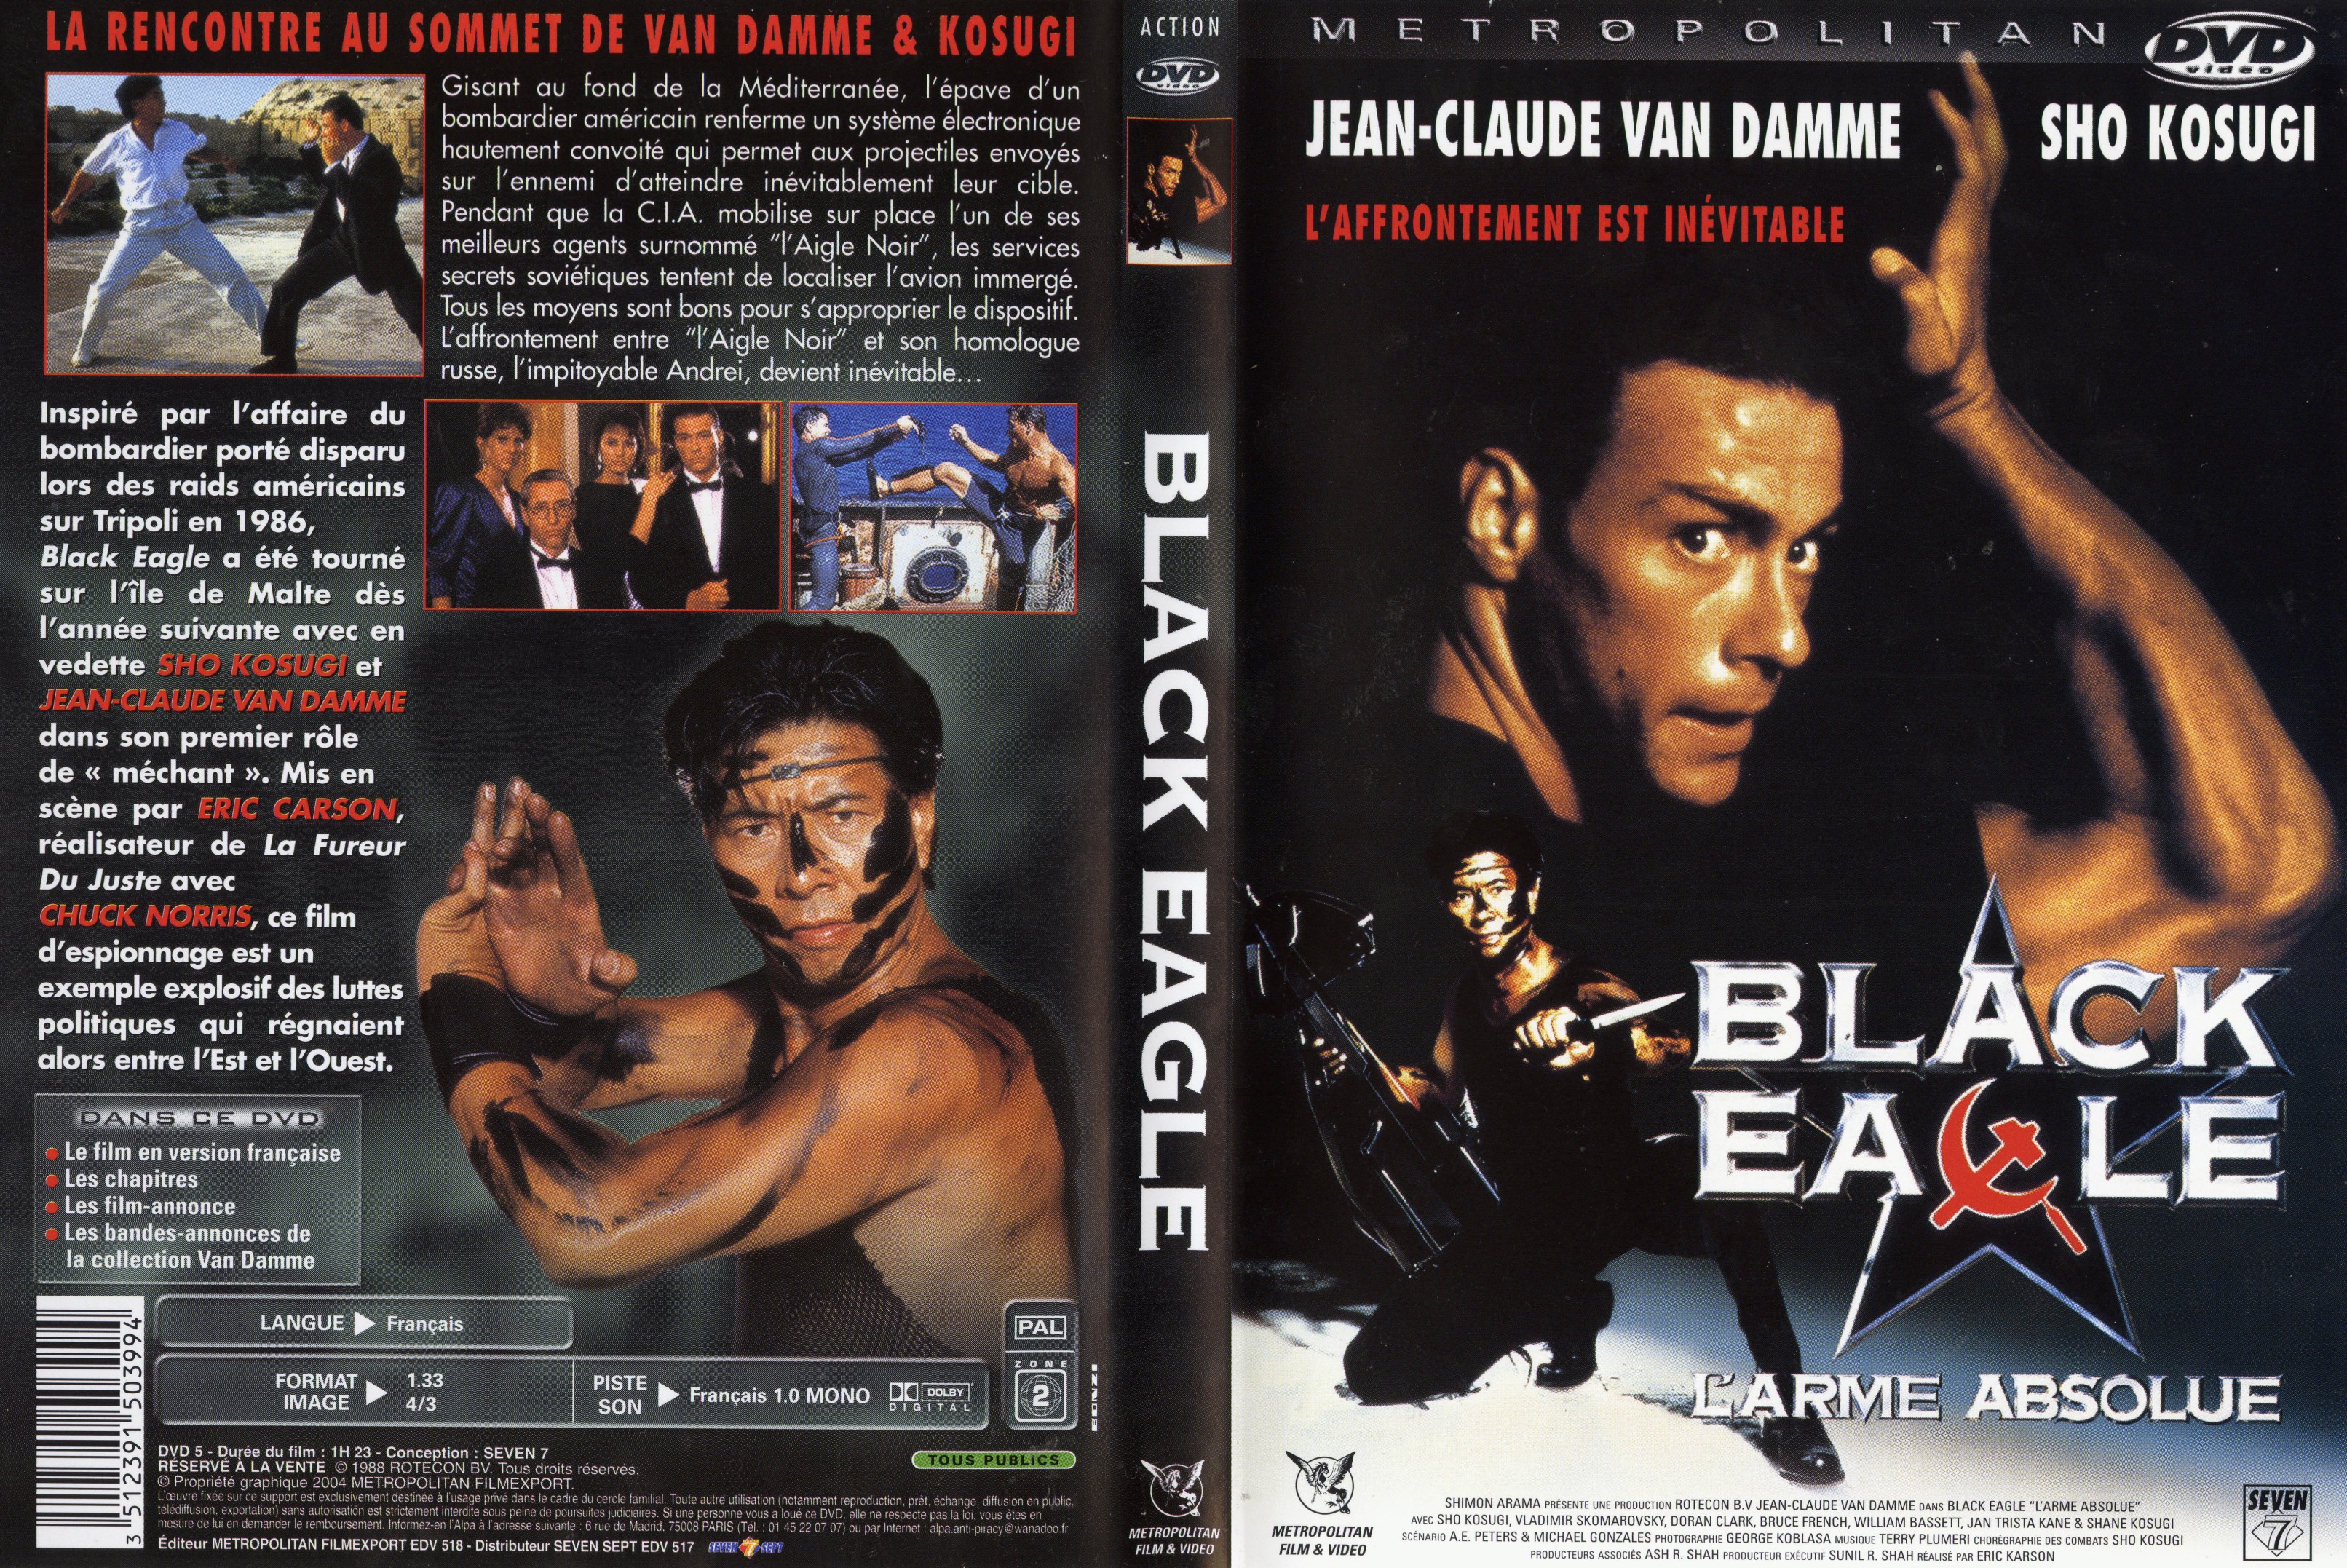 Jaquette DVD Black eagle